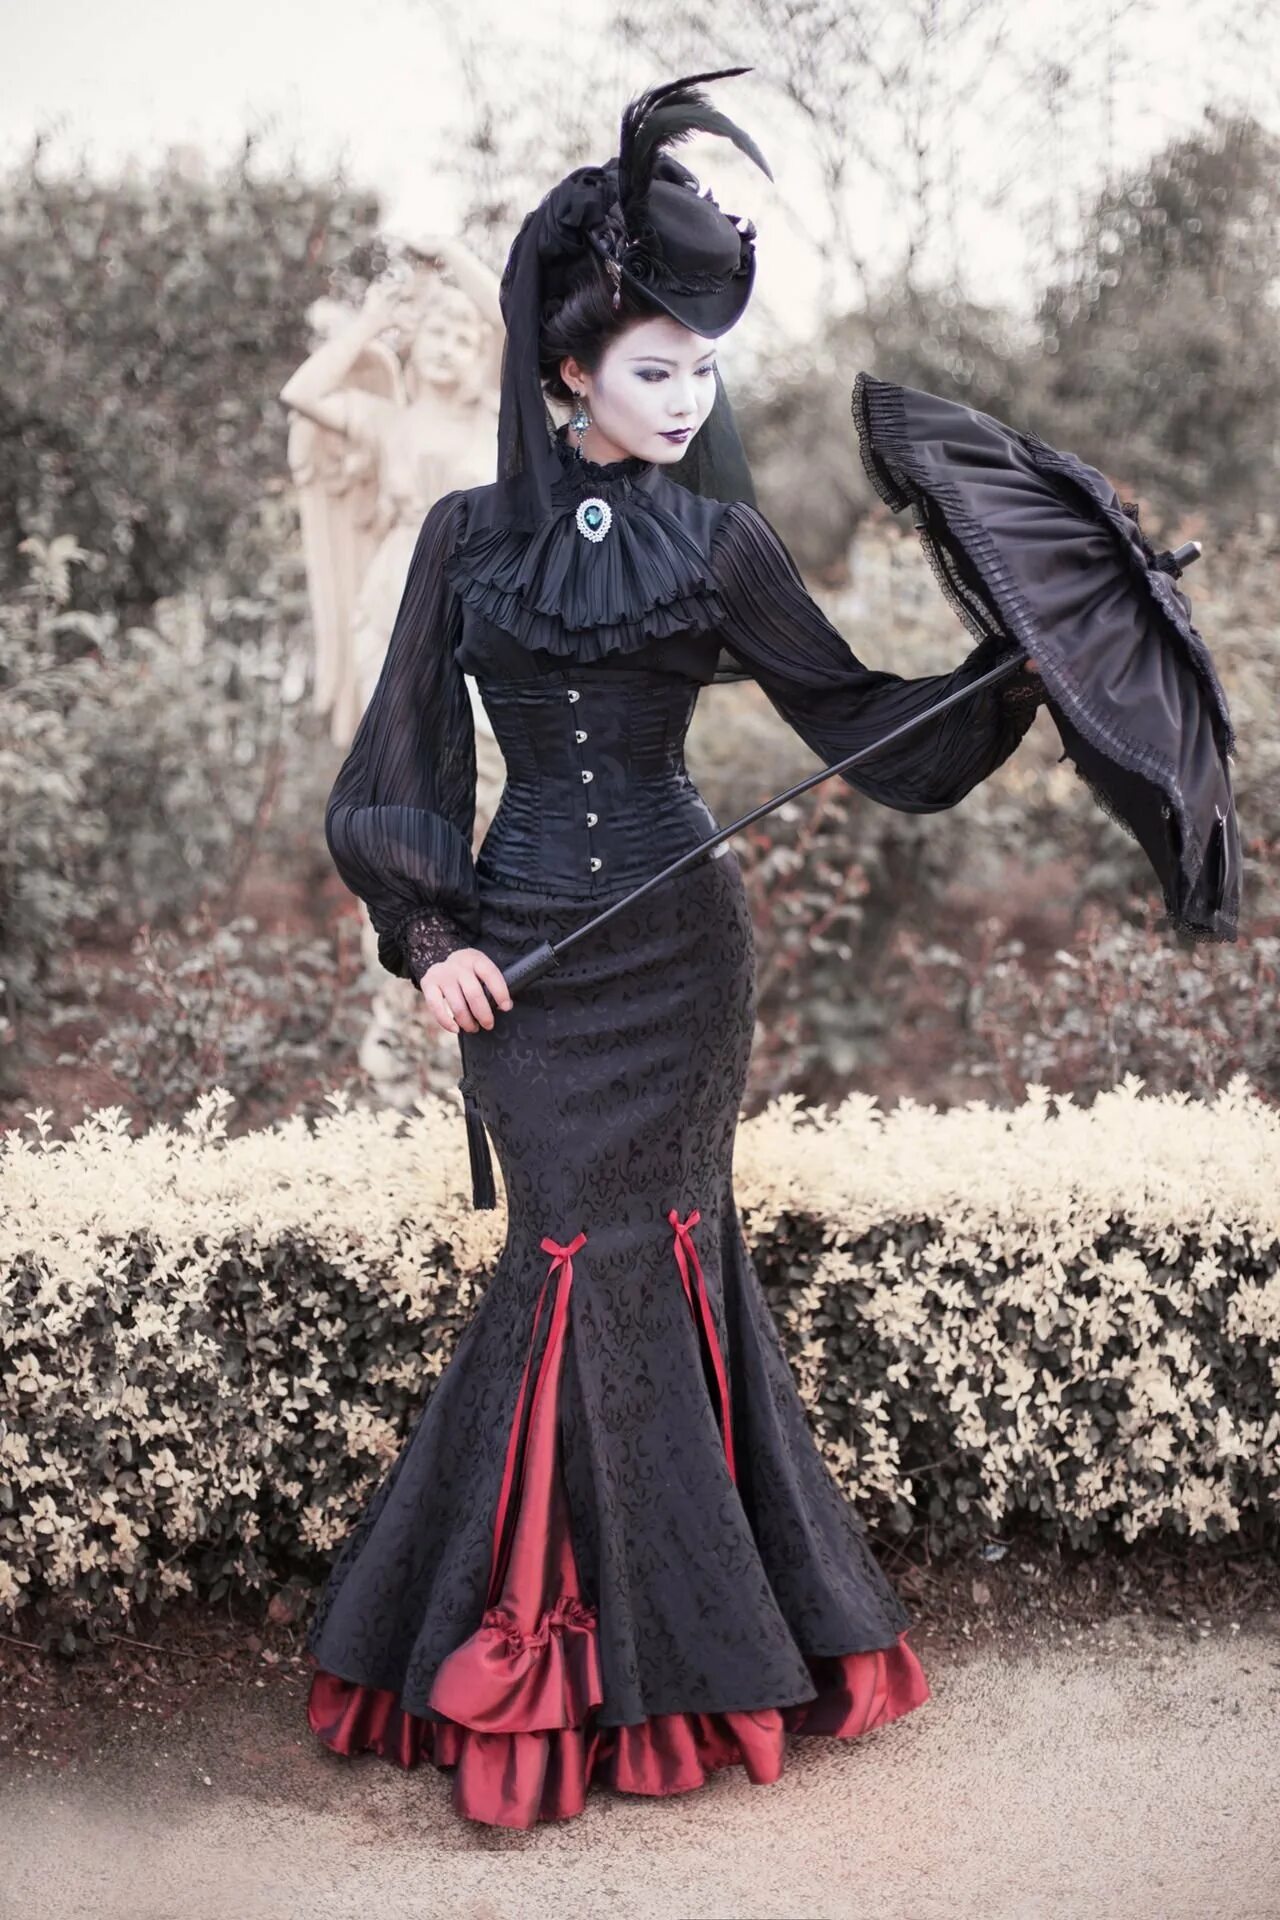 Victorian Vampire goth стиль. Викторианская мода Готика. Платья в стиле викторианской готики. Викторианские платья Готика.